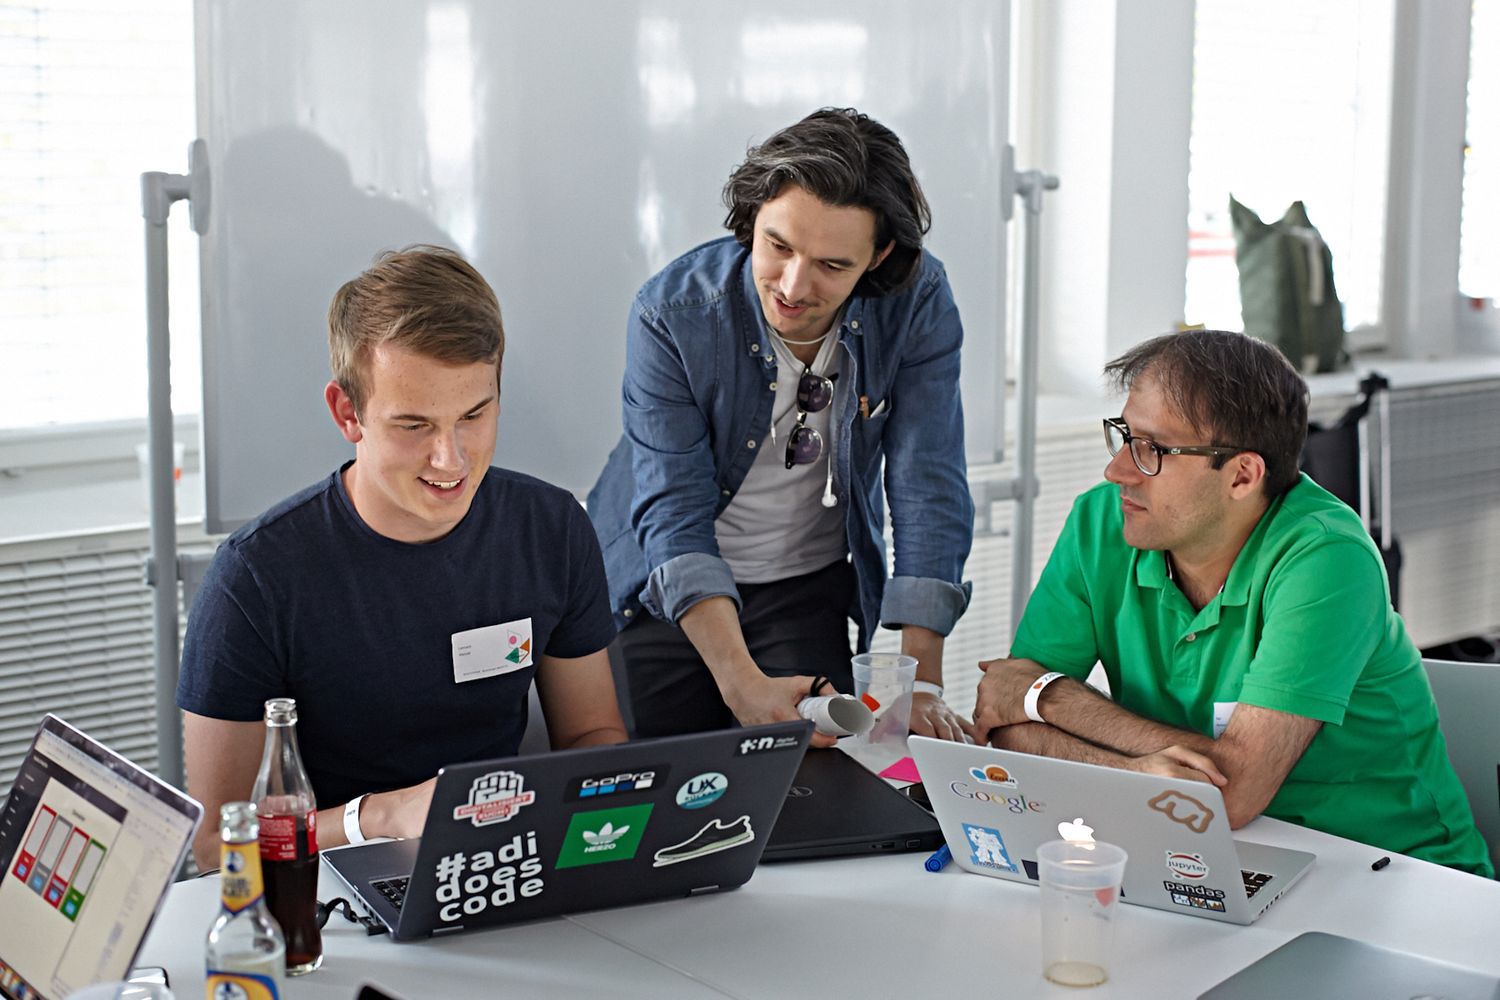 Hackathon participants working on a project